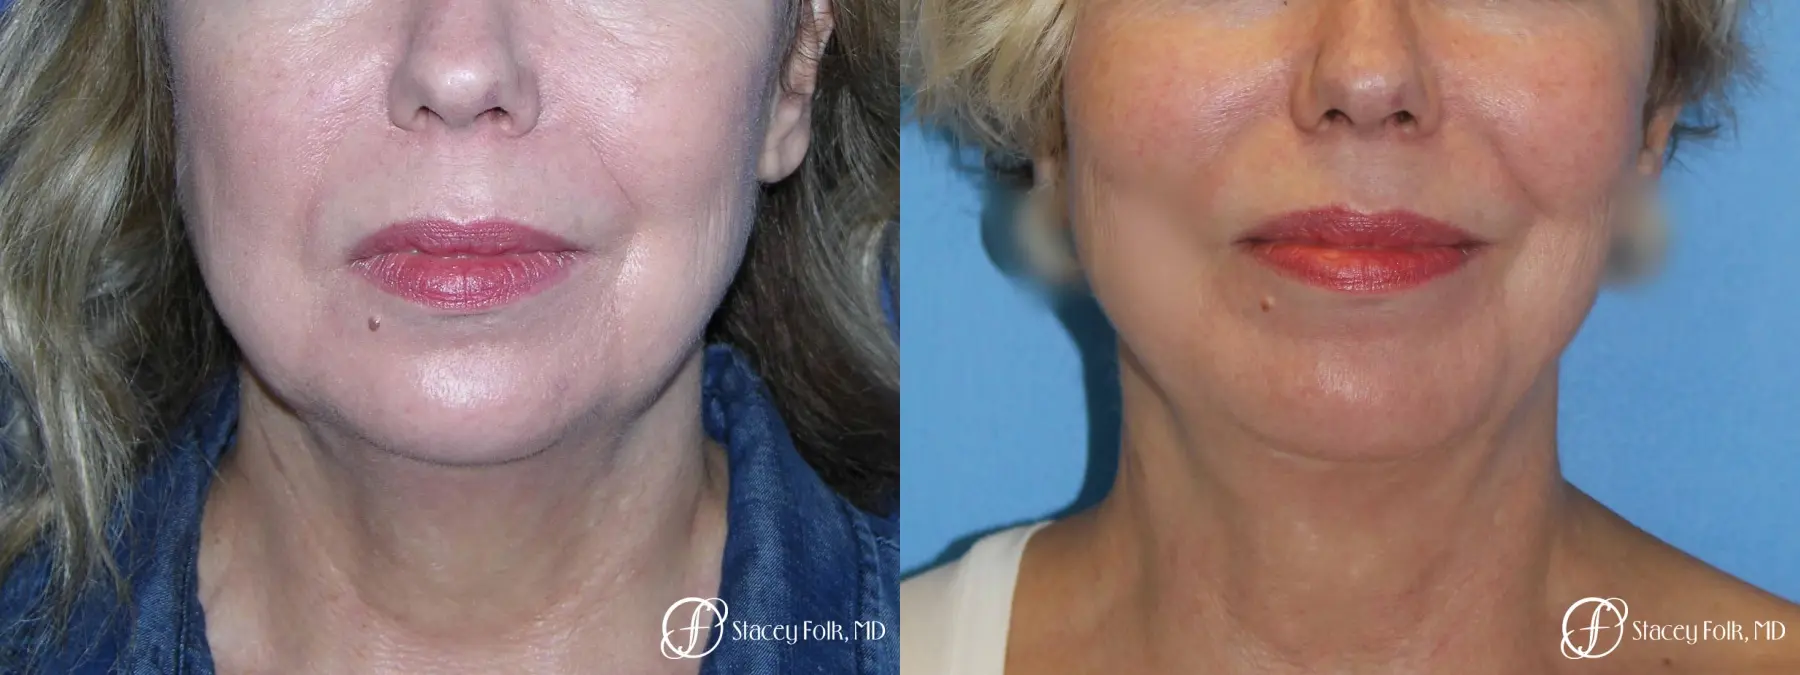 Denver Facial Rejuvenation Facelift, Fat Transfer, and Laser Resurfacing 8513 - Before and After 3